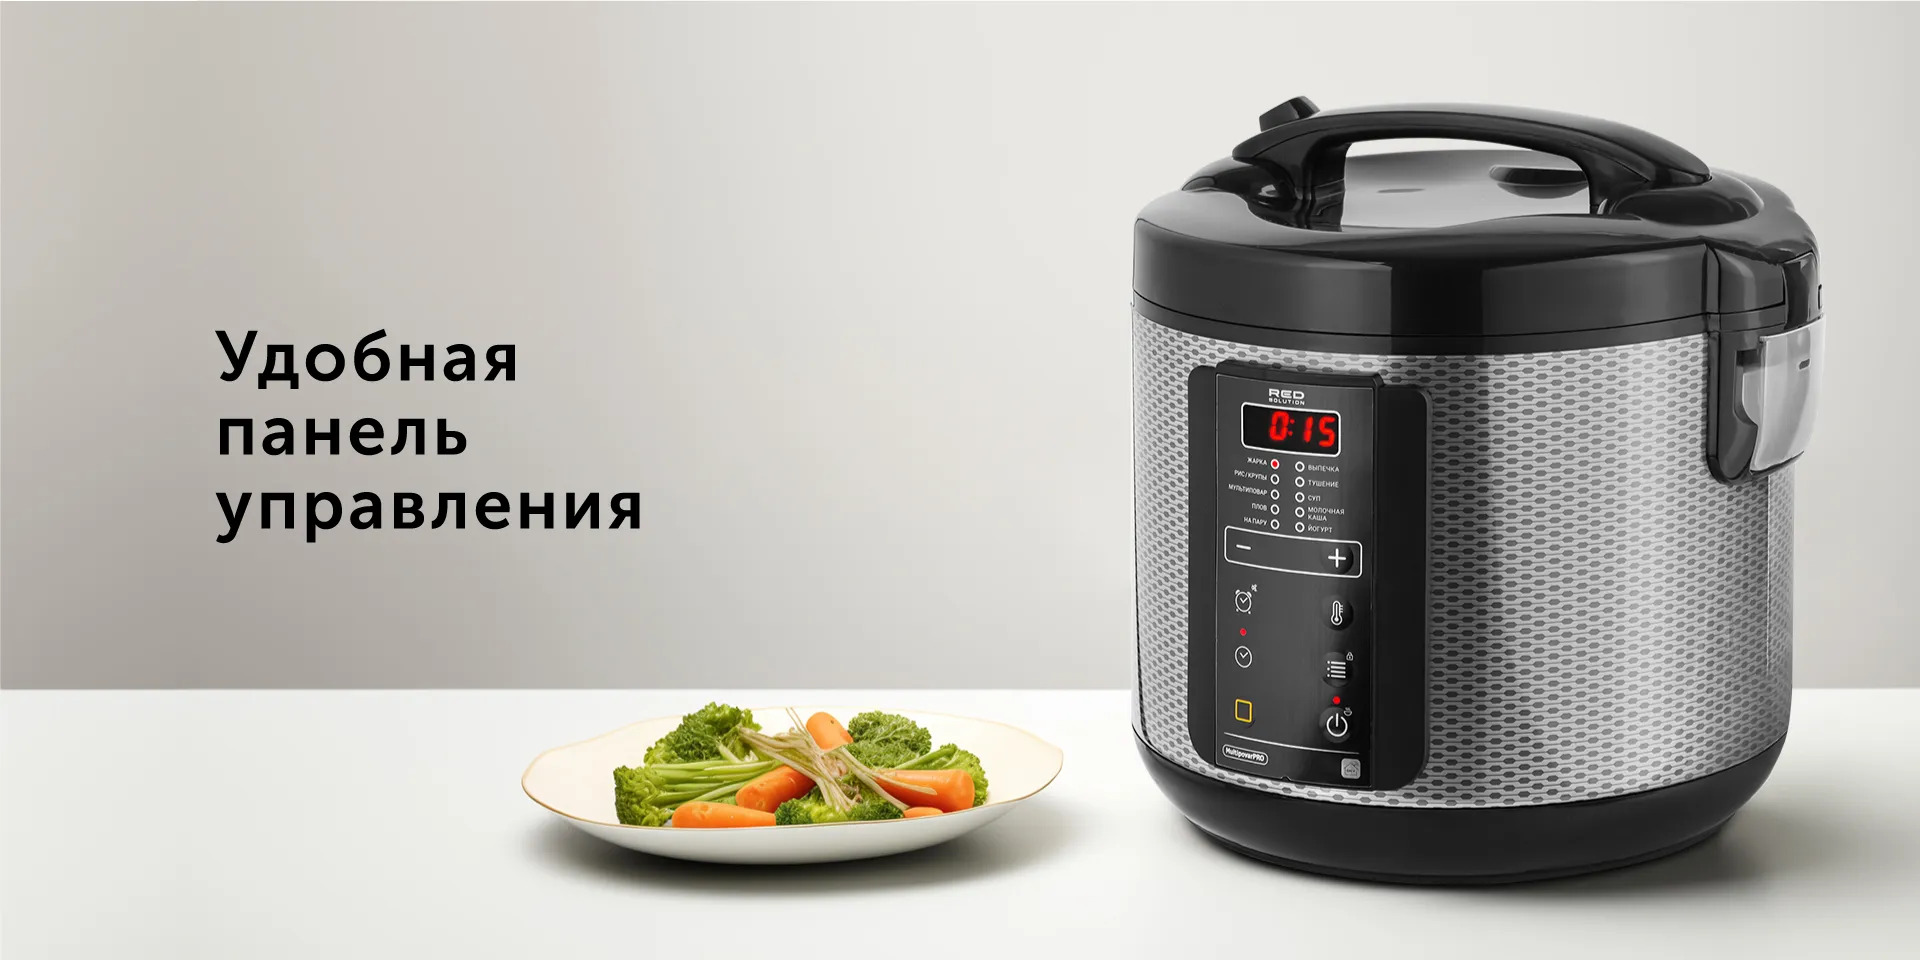 RED SOLUTION RMC-M225S Красноярск